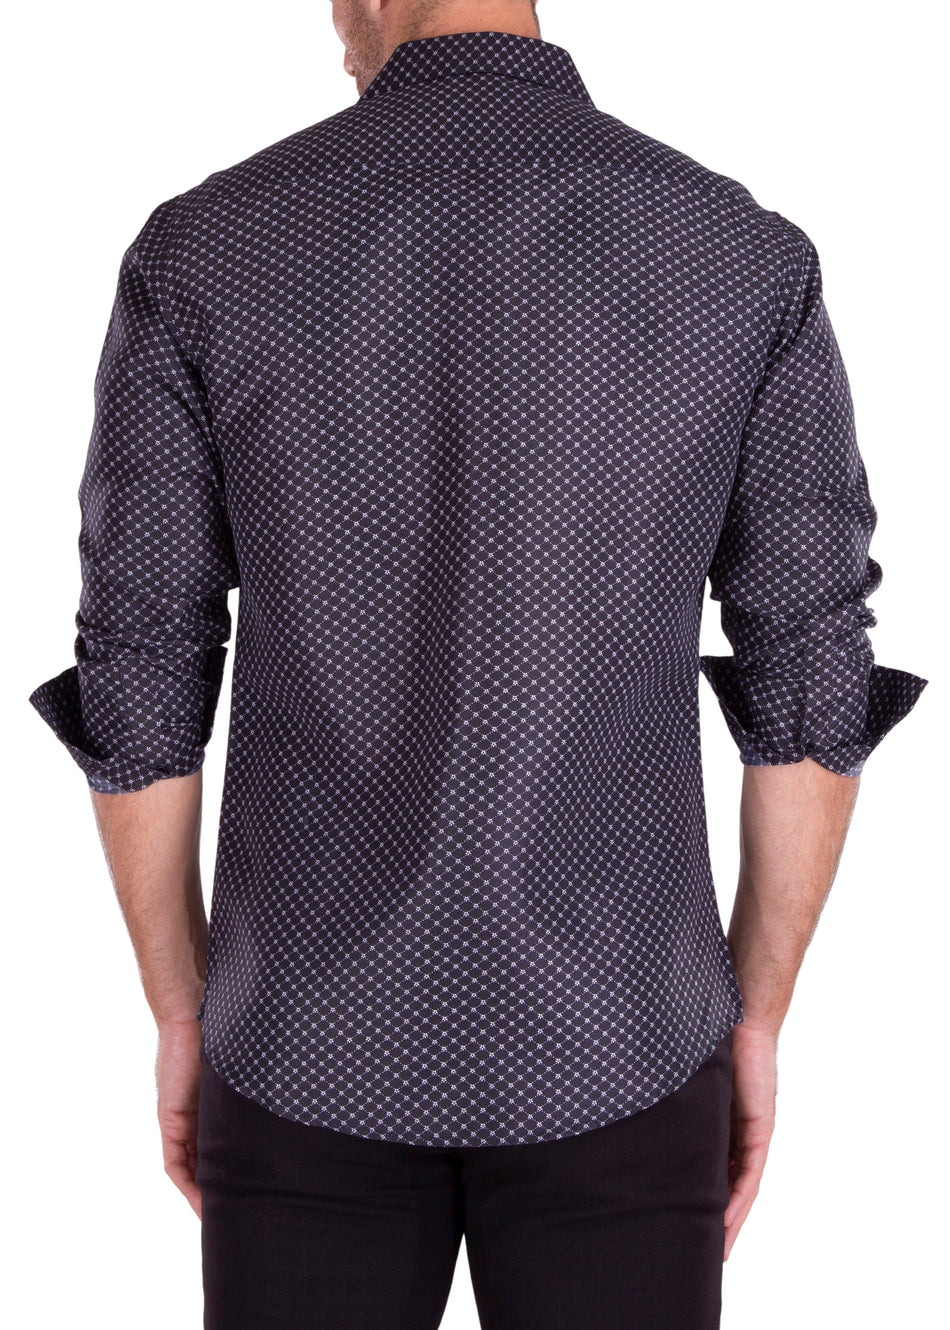 212399 - Black Long Sleeve Shirt